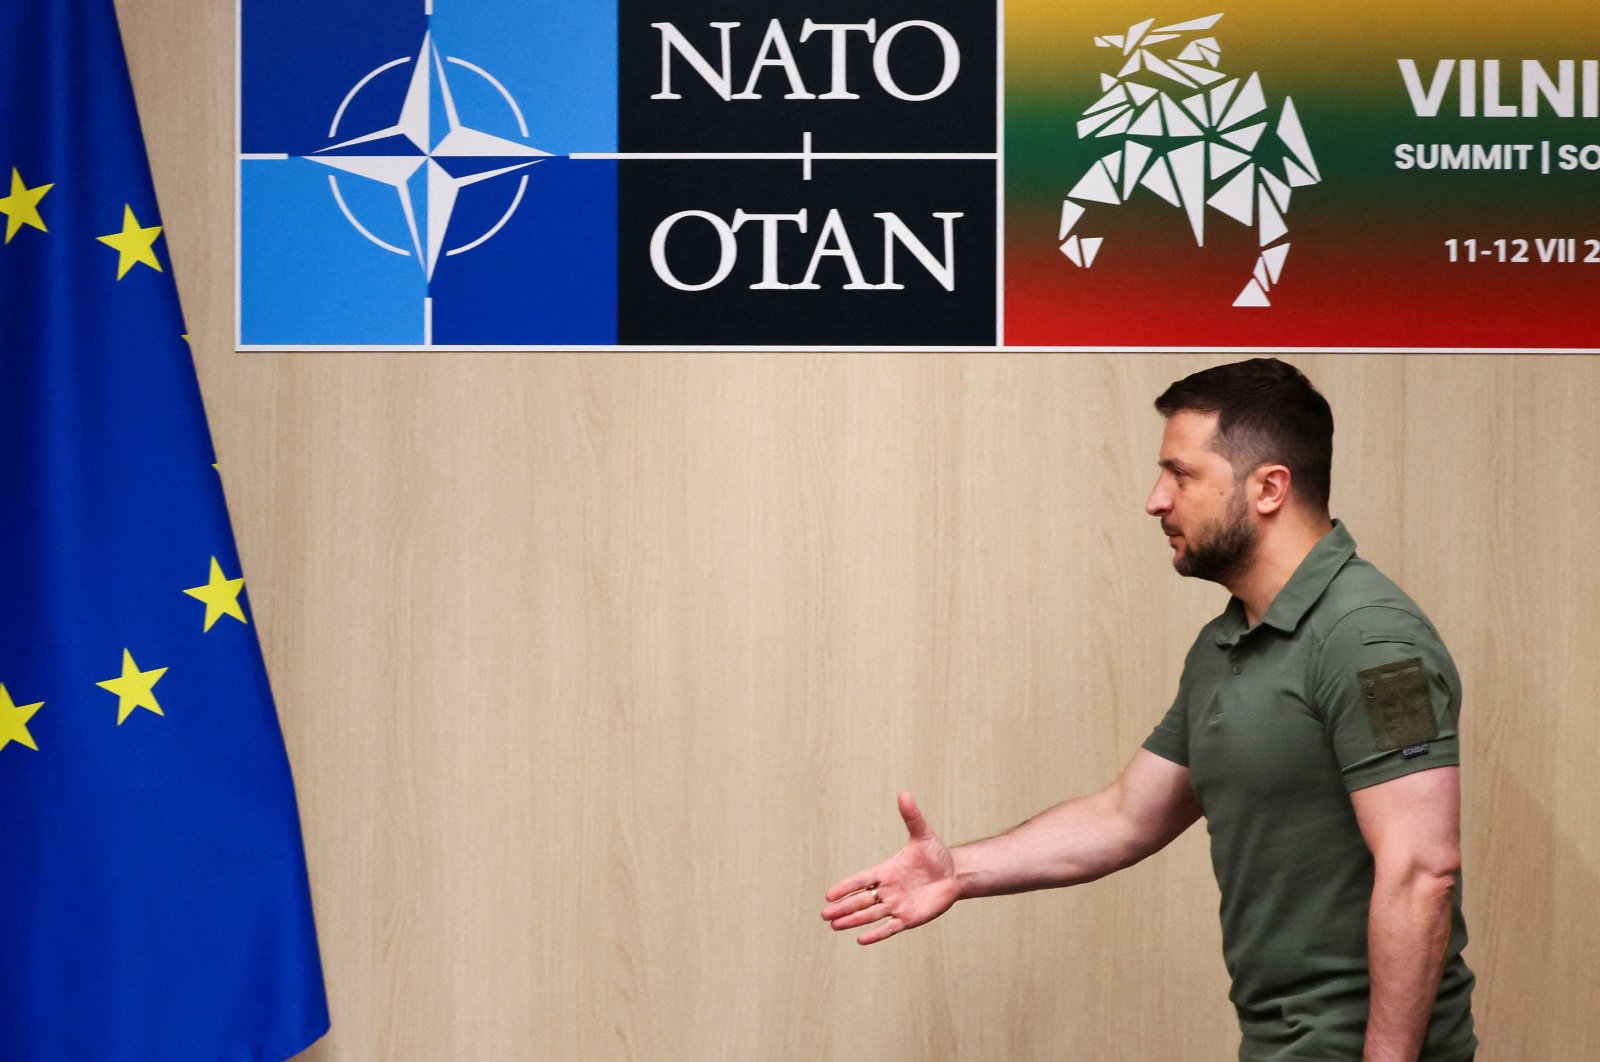 Ukraina mendapat komitmen keamanan Barat setelah patah hati NATO